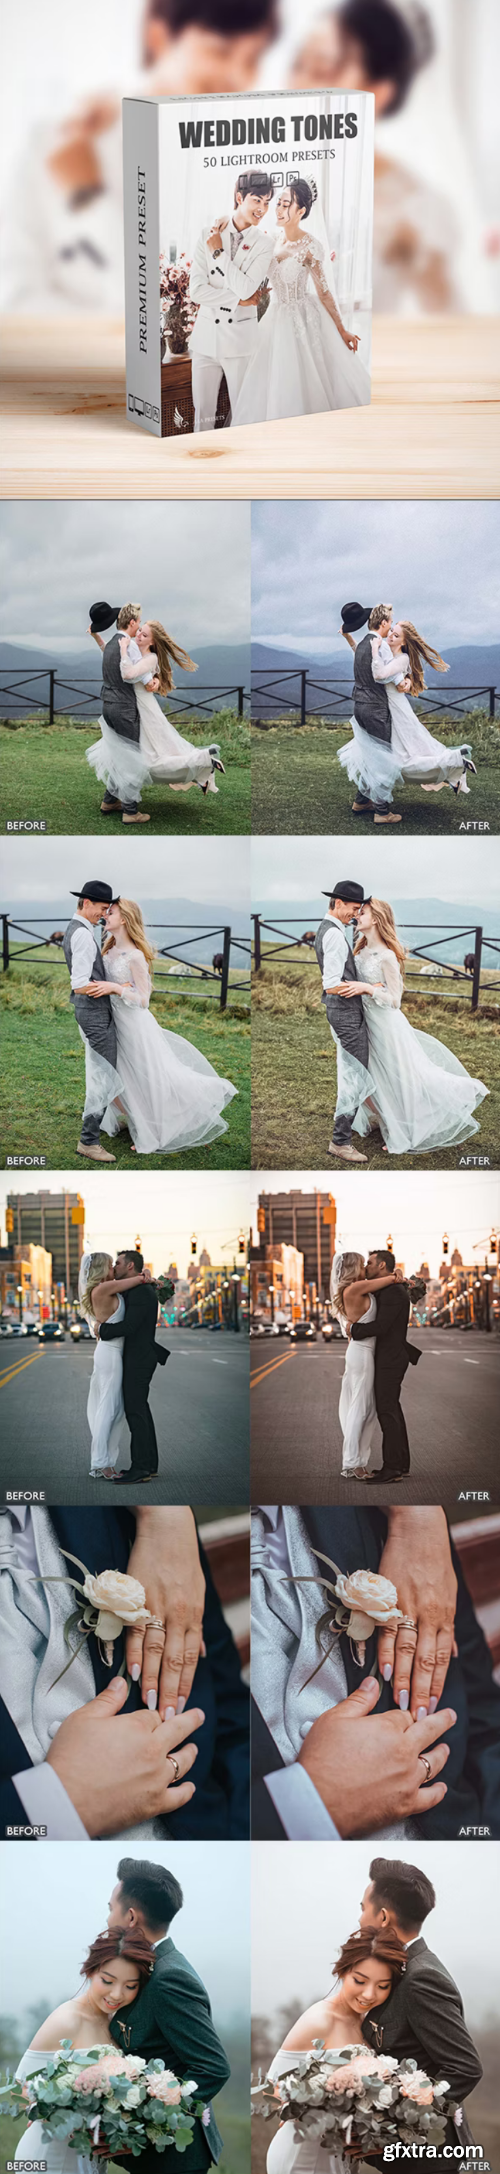 Graphicriver - 50 Premium Wedding Presets for Lightroom and Photoshop